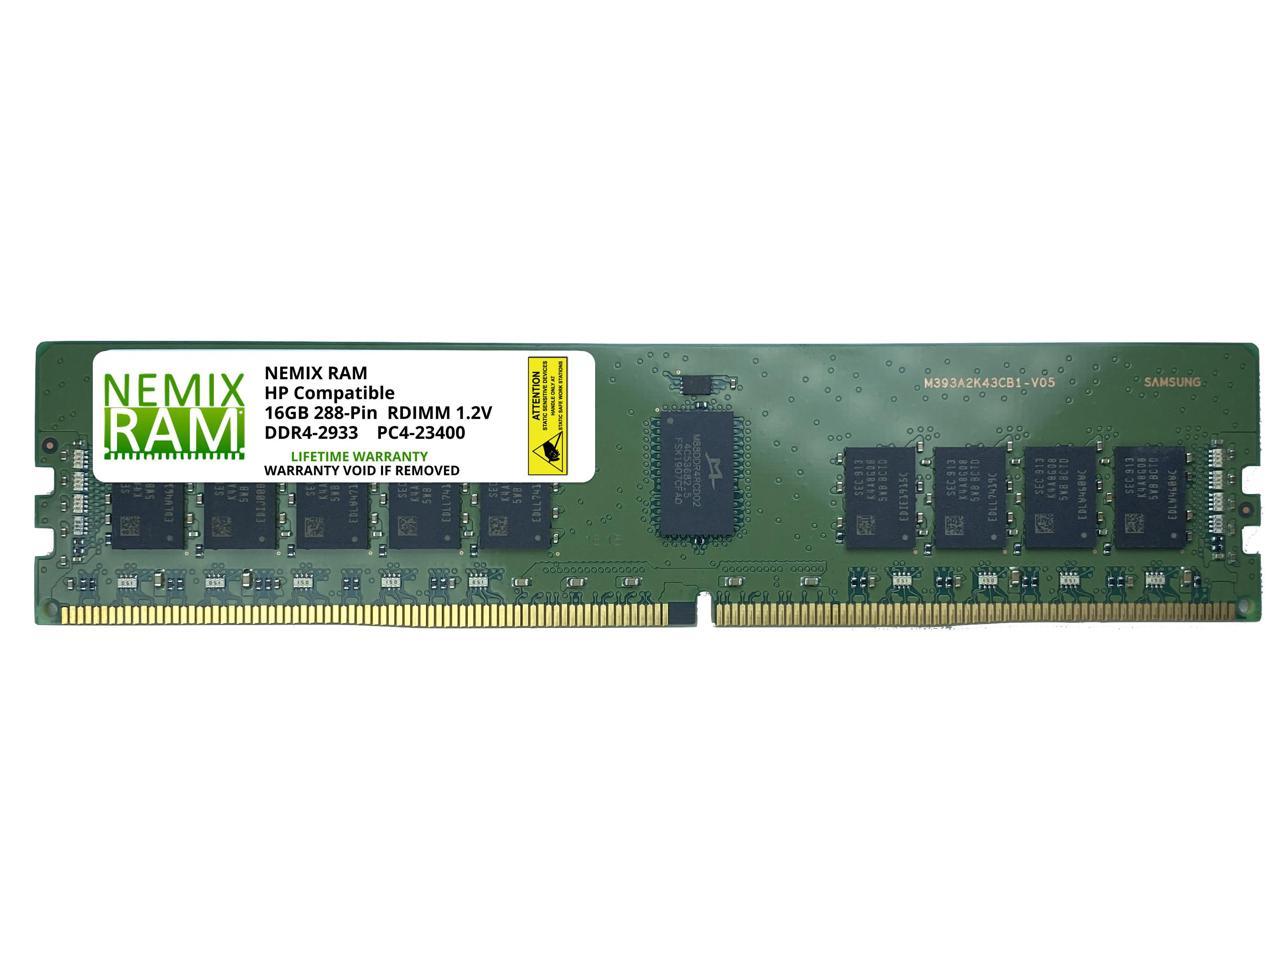 16GB RDIMM Memory for HP Z8 G4 Workstation DDR4-2933 by Nemix Ram 